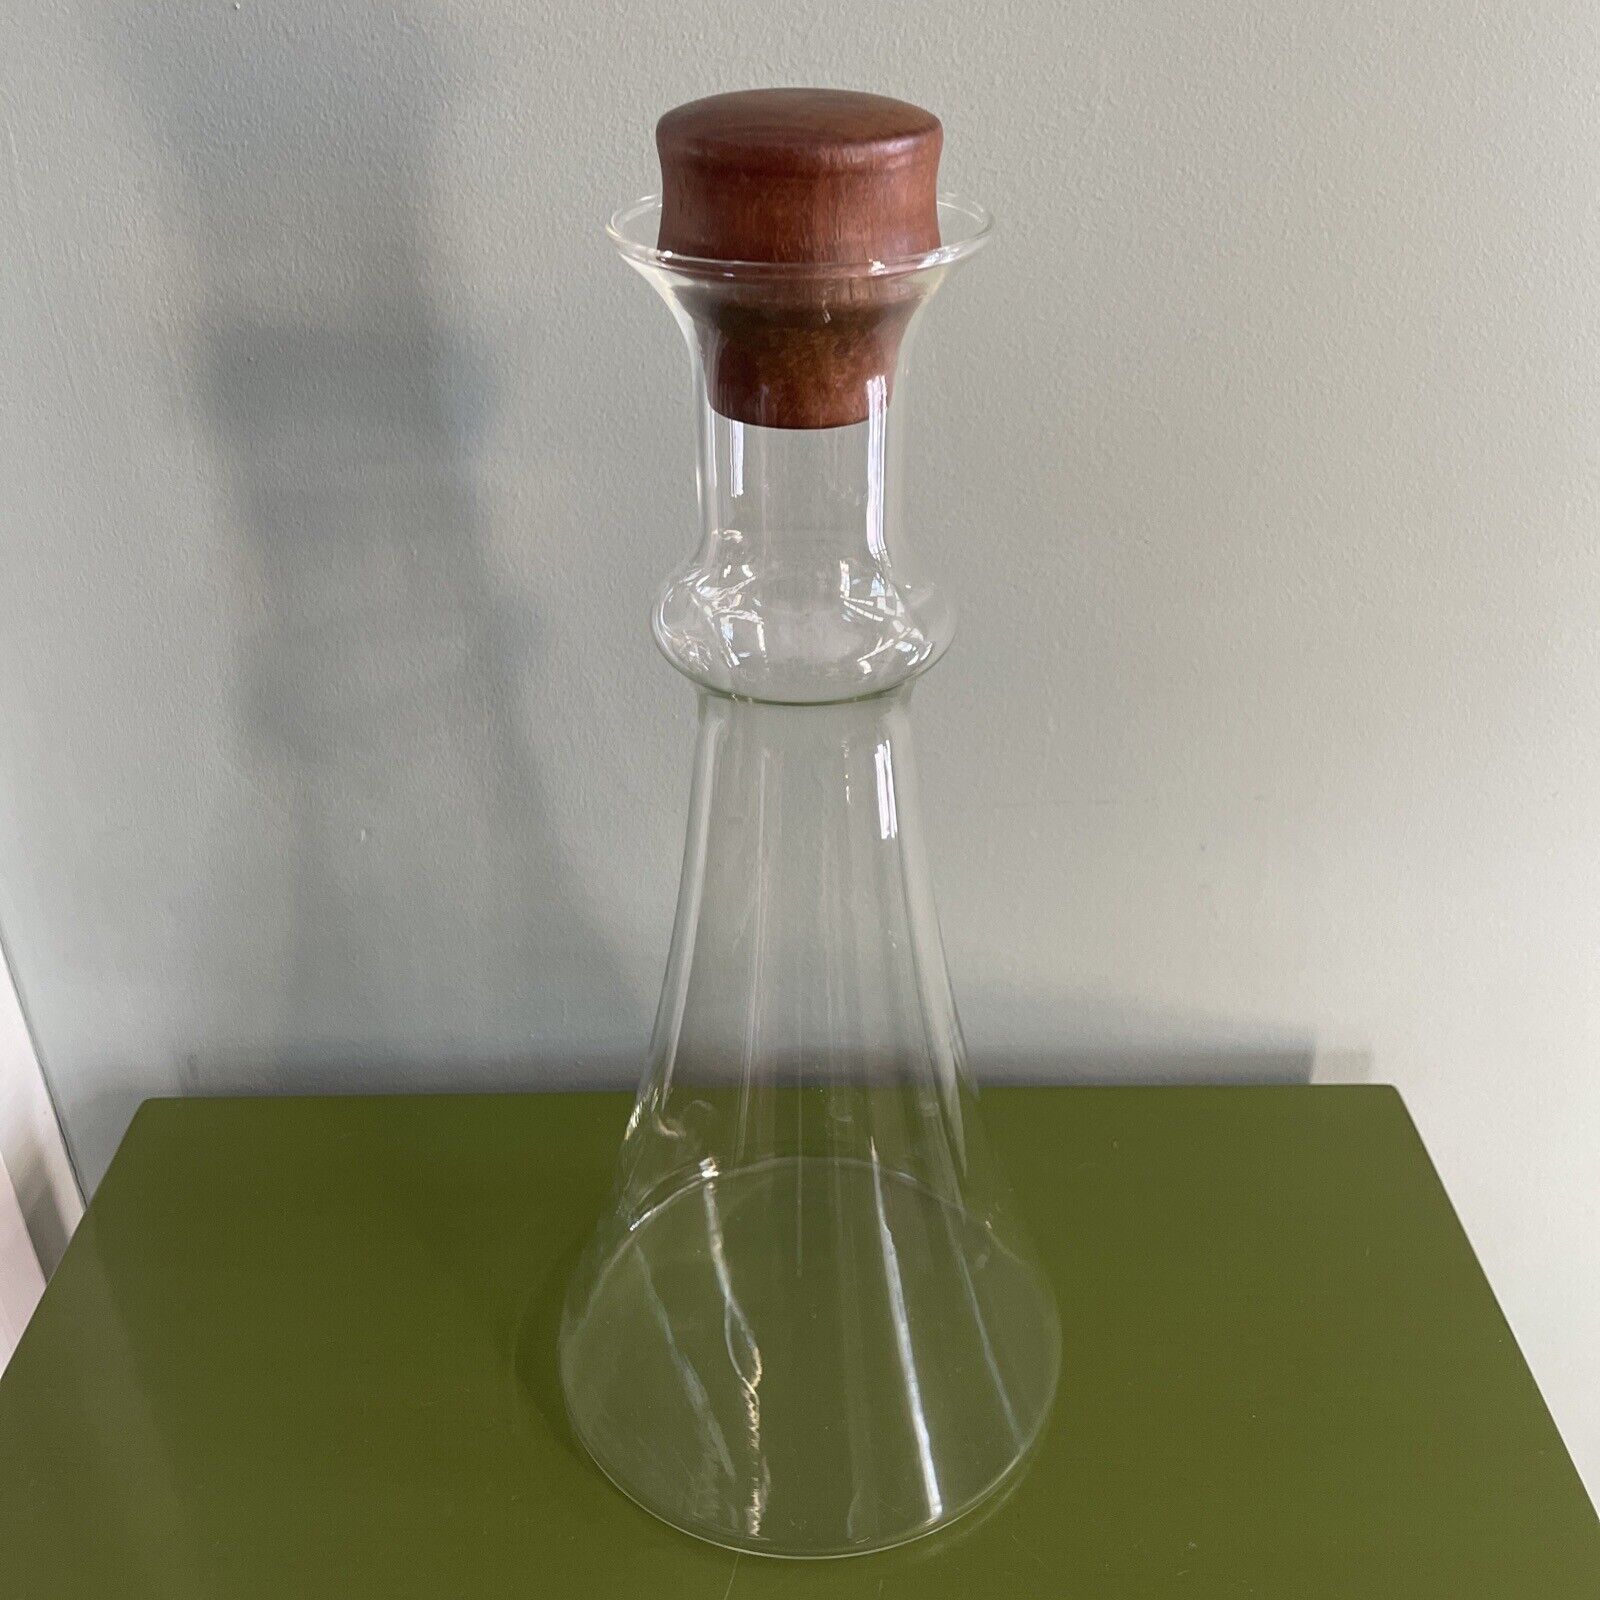 Dansk Denmark Glass Decanter with Teak Stopper By Gunnar Cyren Design 12”